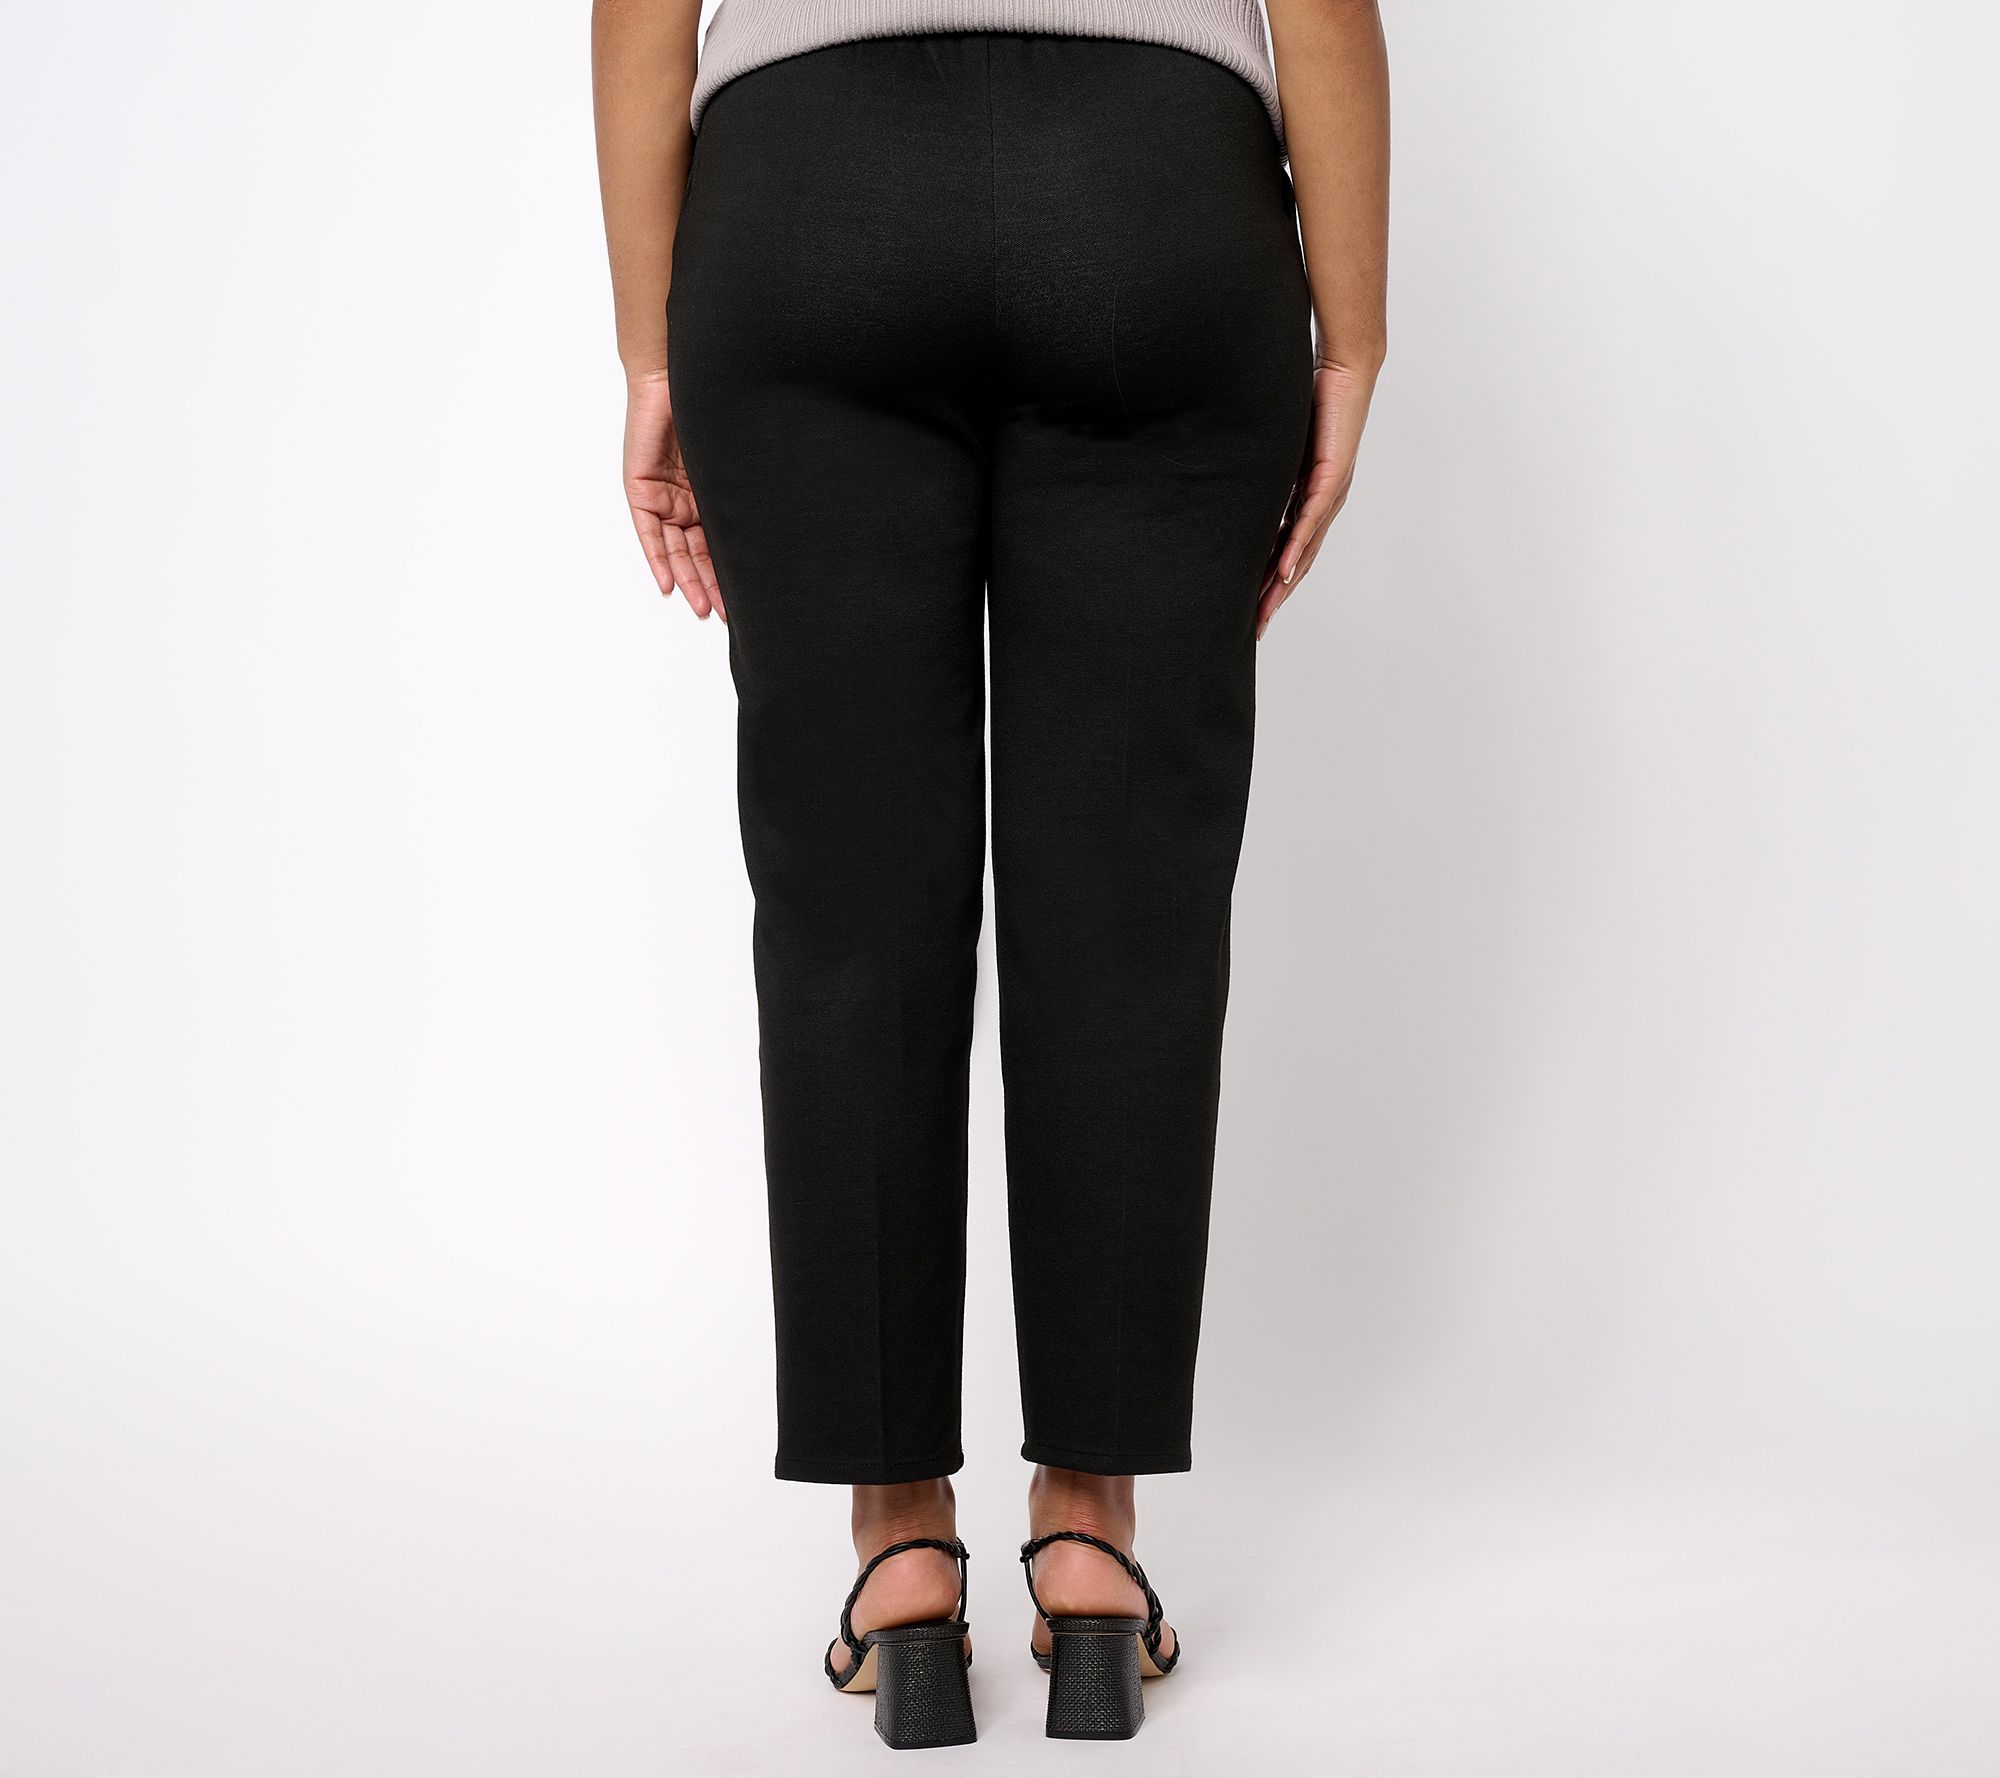 NWT IN-STUDIO PETITE WOMEN'S SIZE 6 GRAY DRESS PANTS SLACKS BUSINESS CASUAL